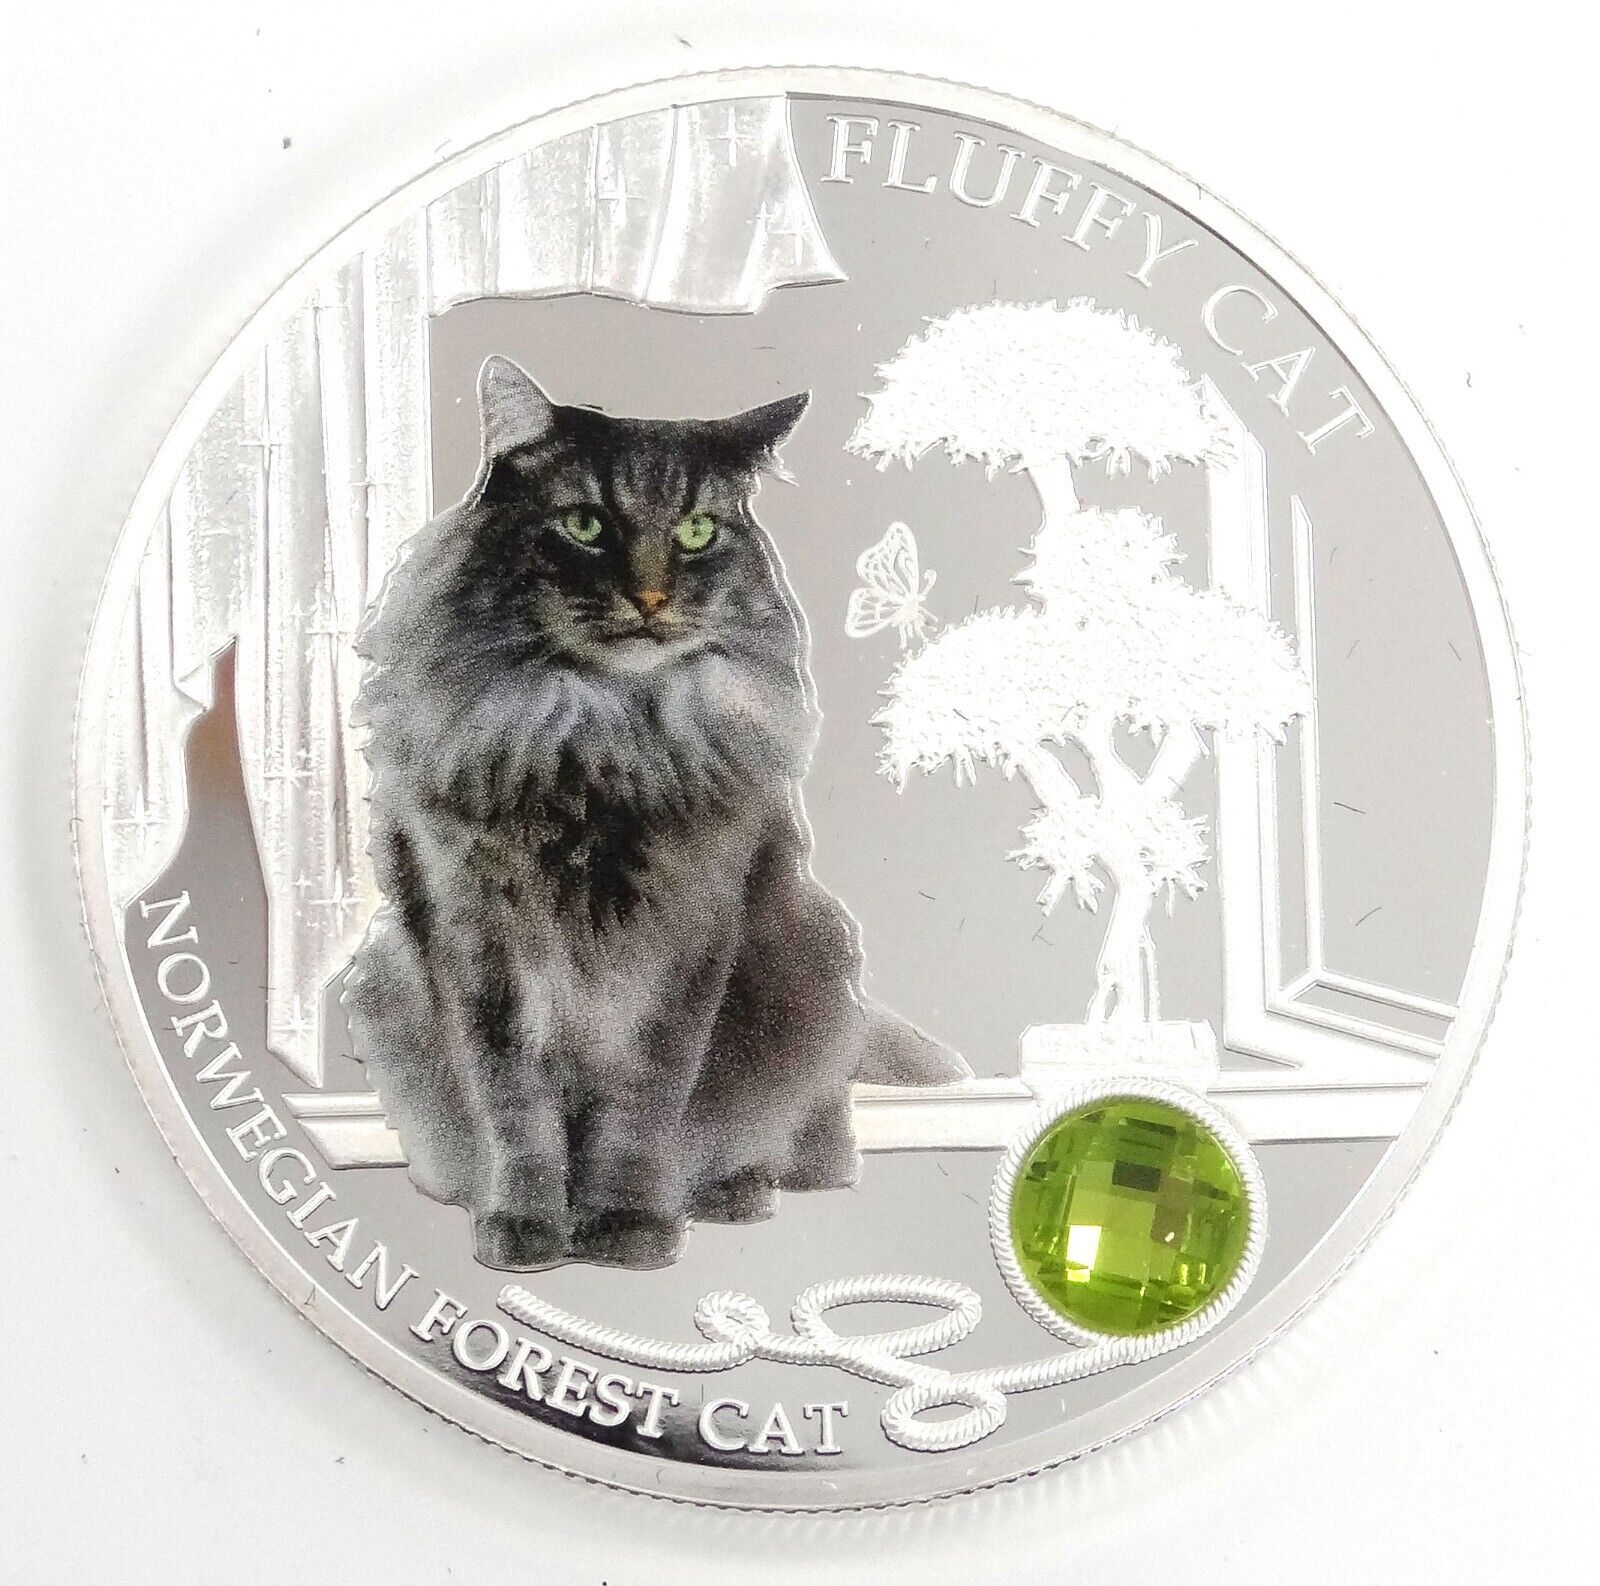 1 Oz Silver Coin 2013 $2 Fiji Dogs & Cats - Norwegian Forest Fluffy Cat w/ stone-classypw.com-1